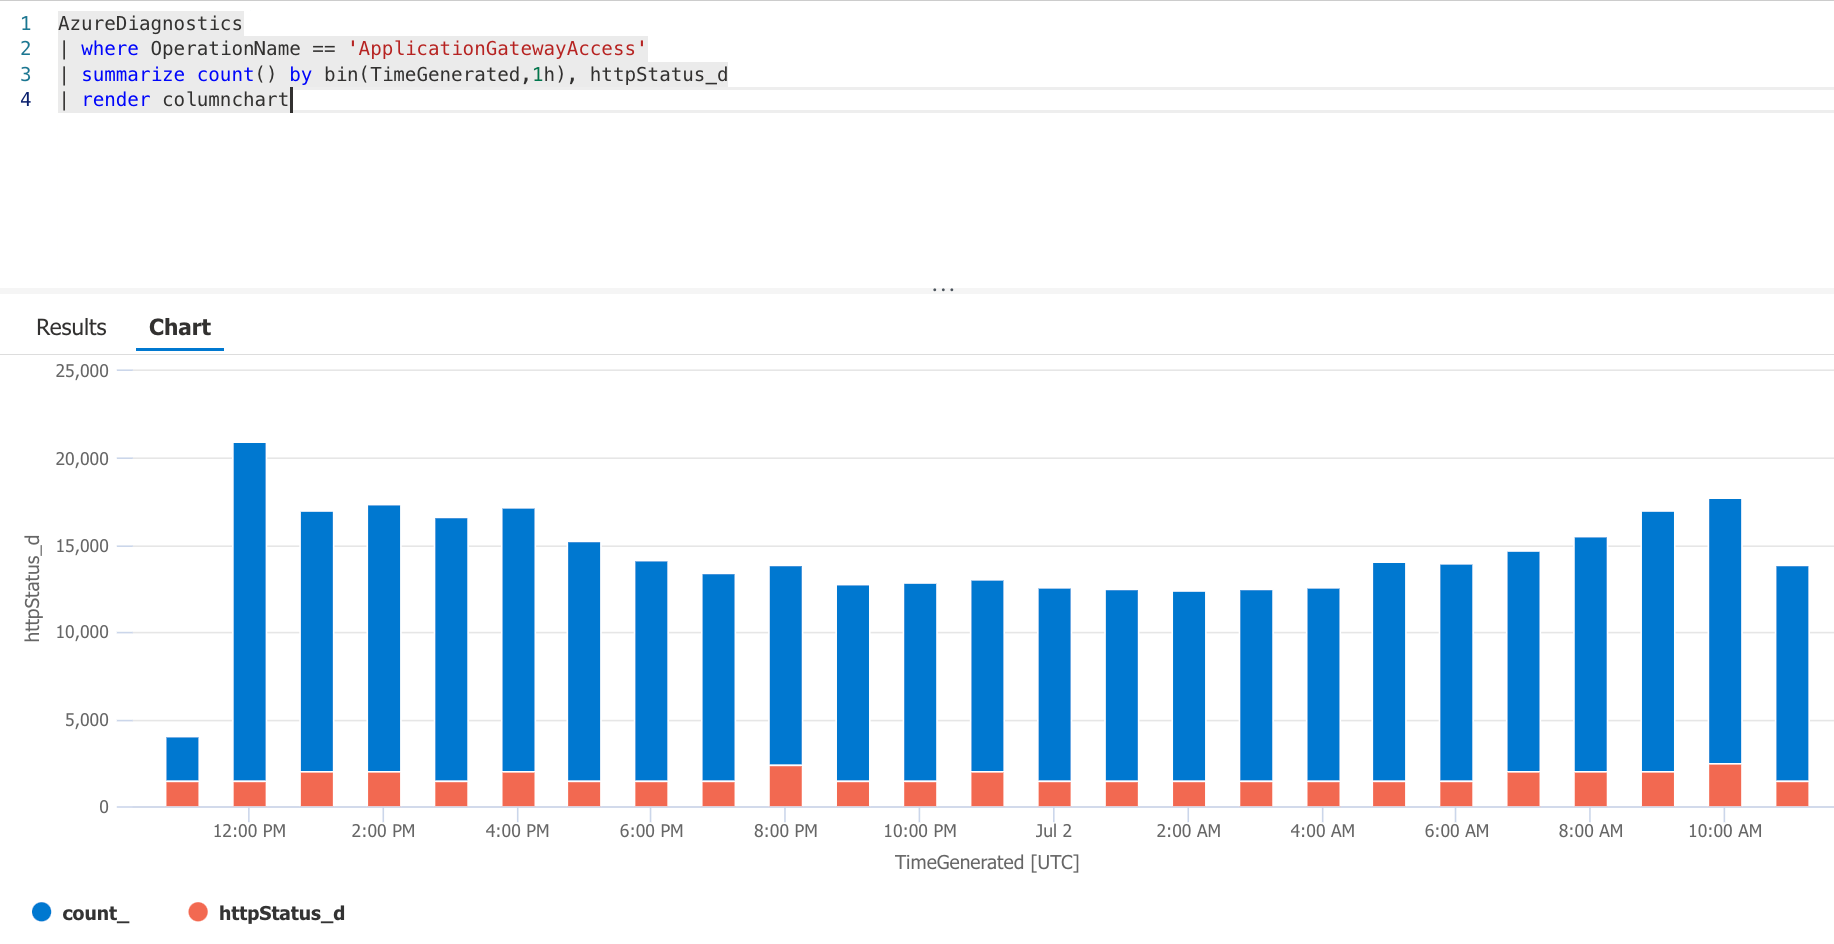 log analytics azure app gateway chart grouped by http status not working